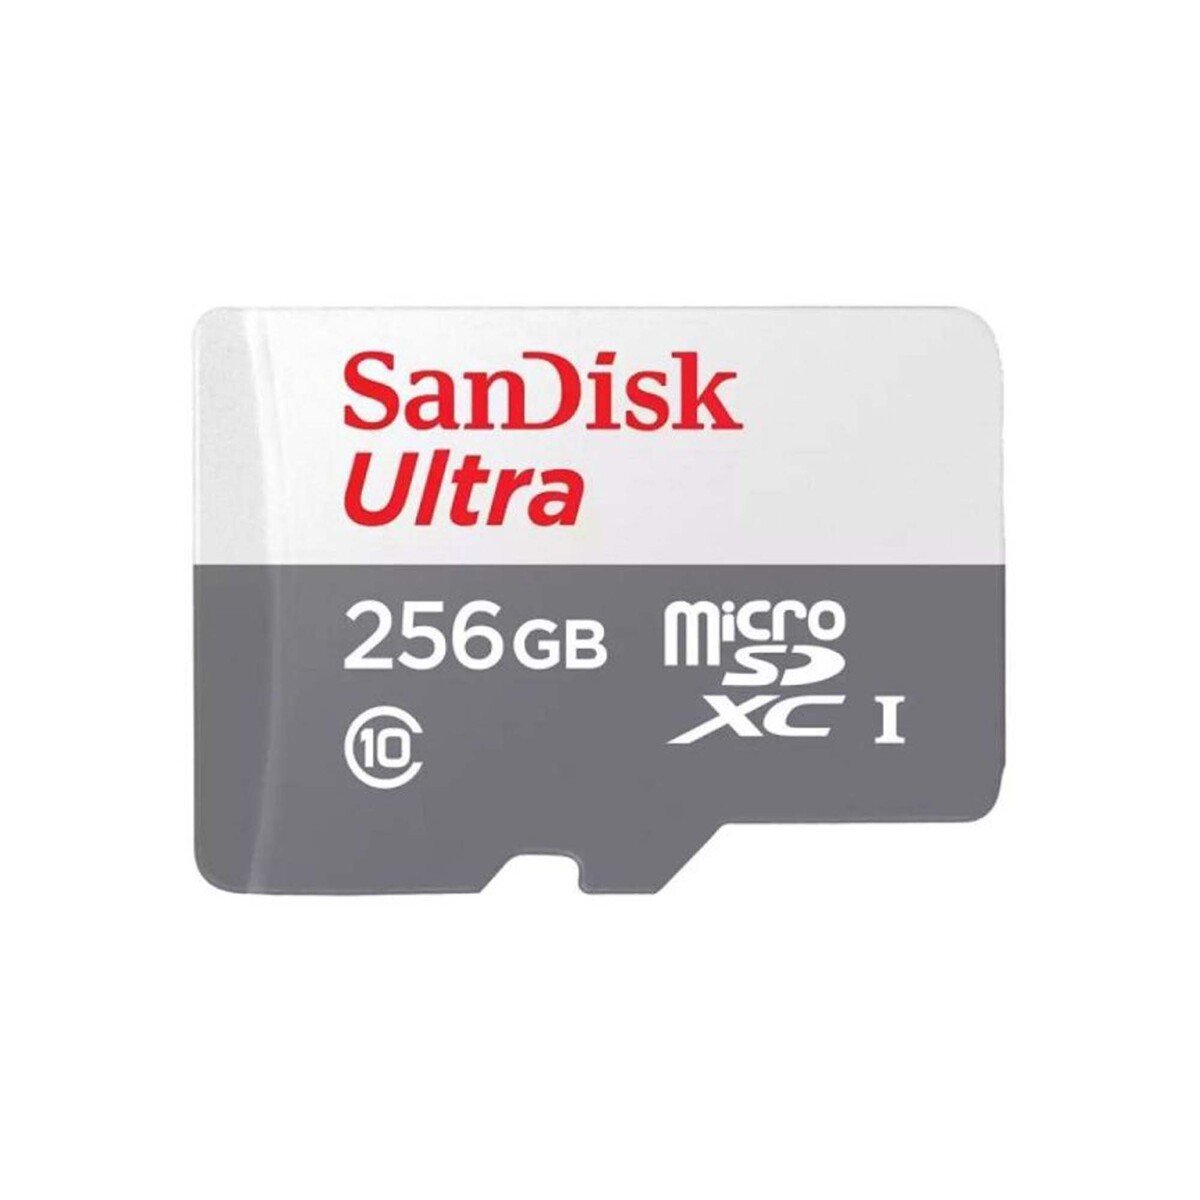 SanDisk Ultra microSDXC Card SDSQUNR 256GB